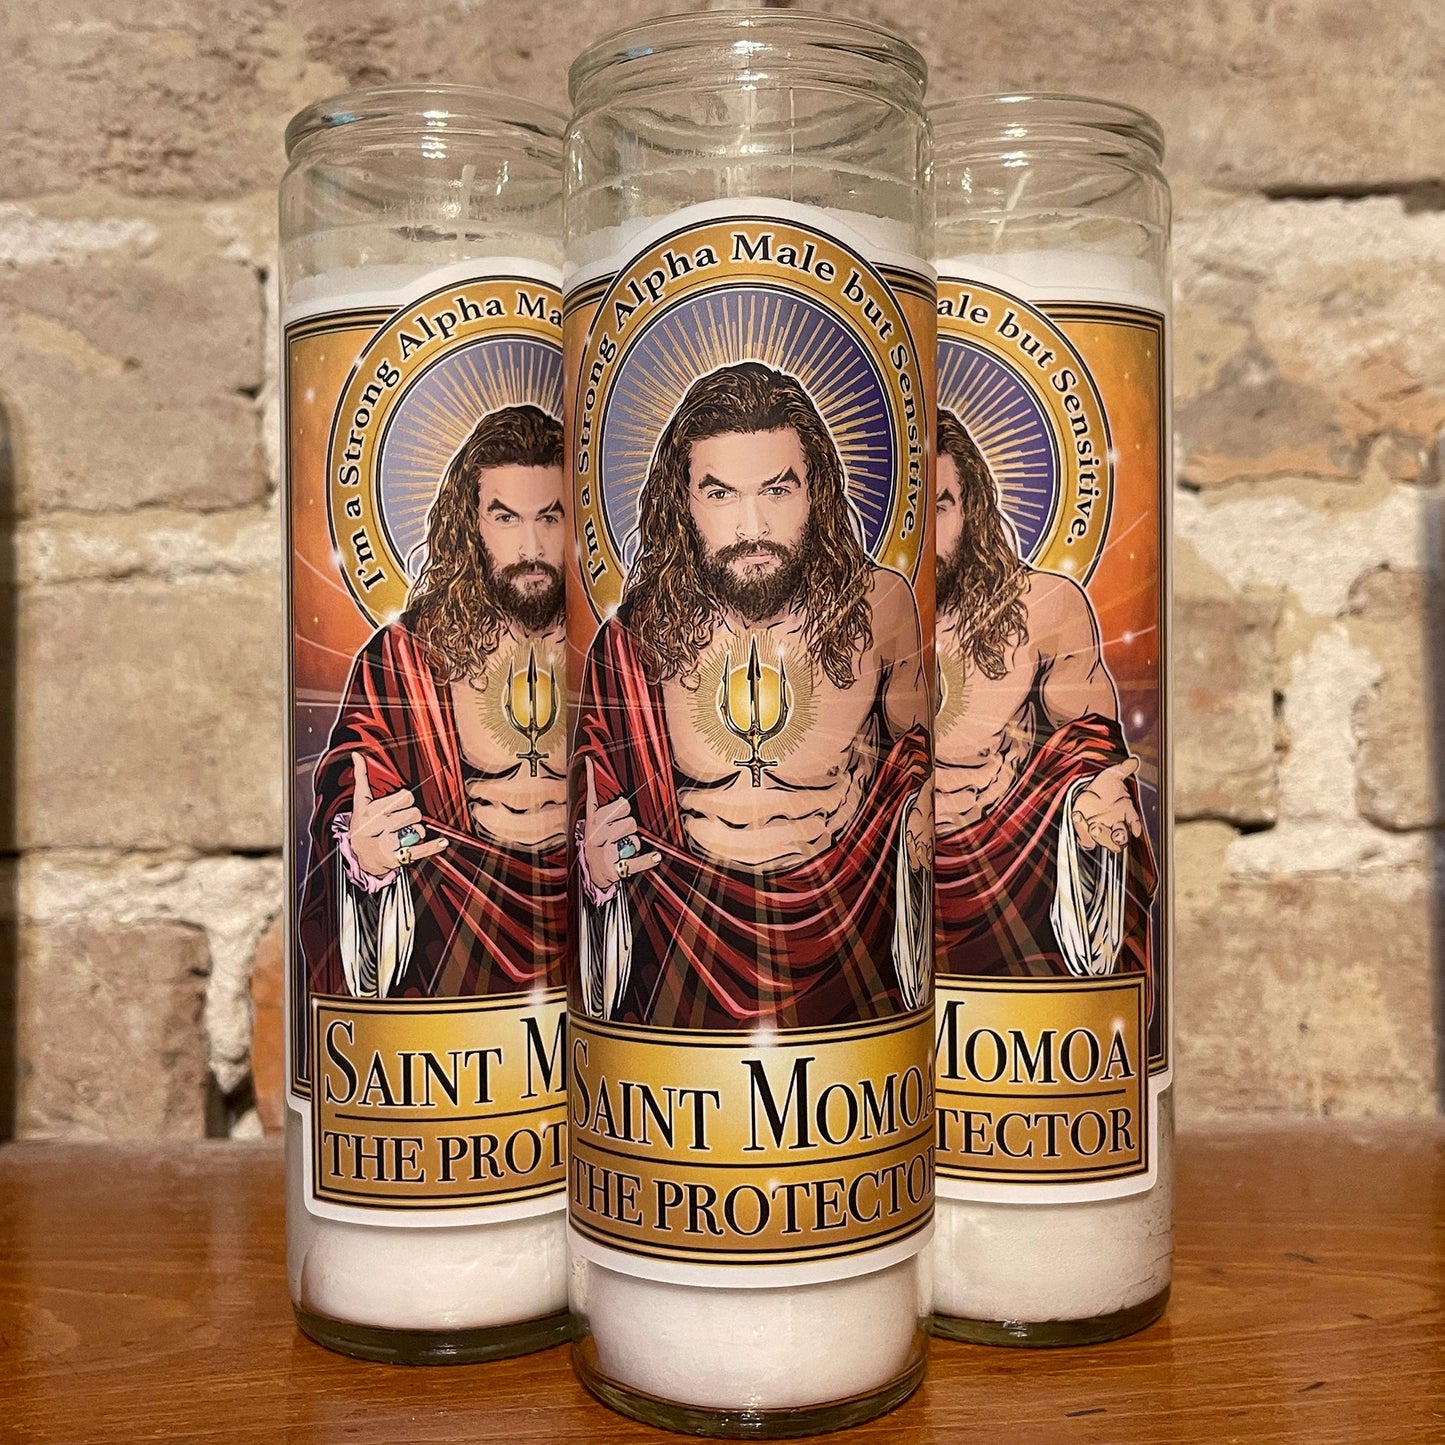 Saint Momoa The Protector Candle Cleaverandblade.com